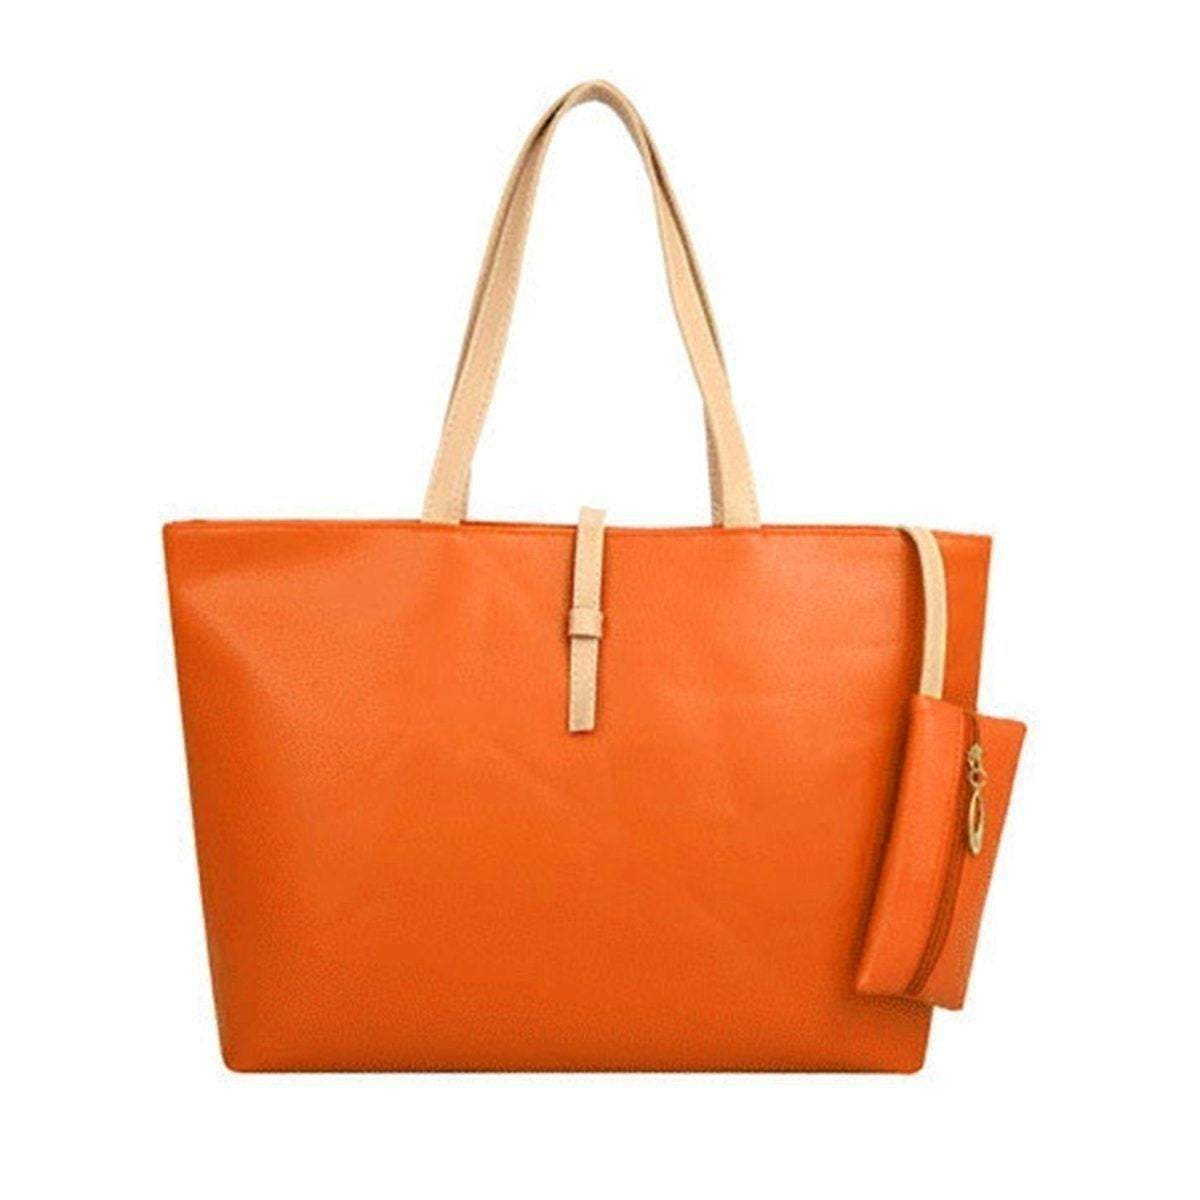 Fashion Women Large Leather Satchel Handbag